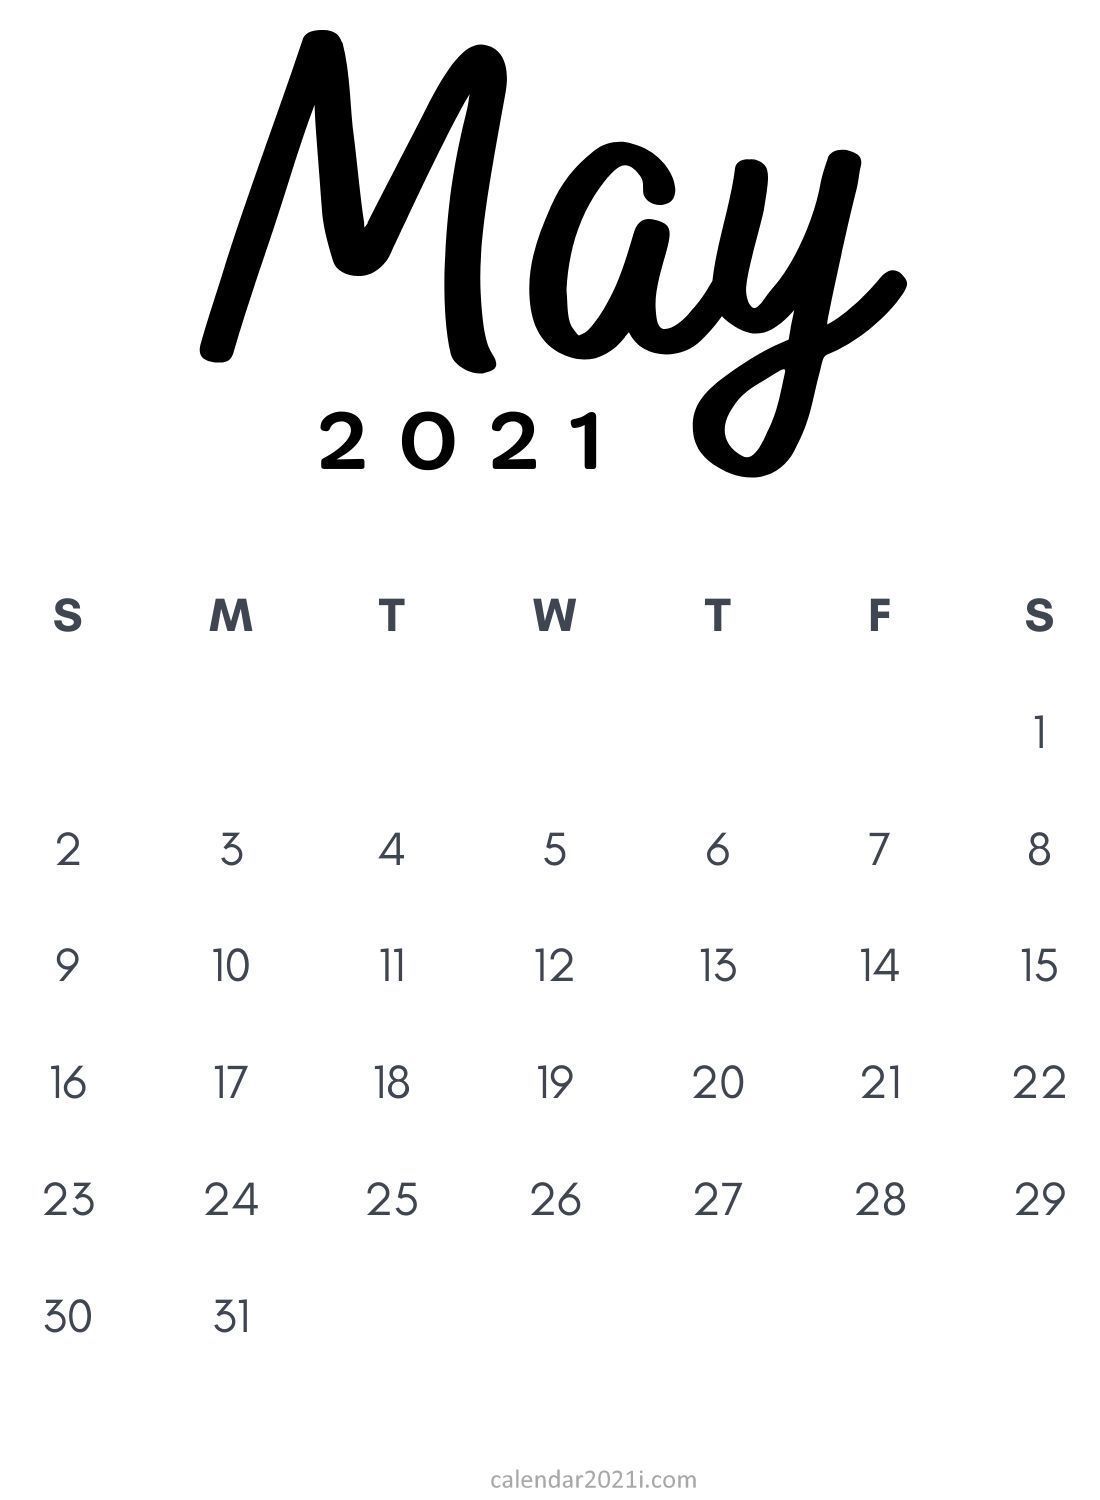 May 21 Calendar Wallpapers Wallpaper Cave